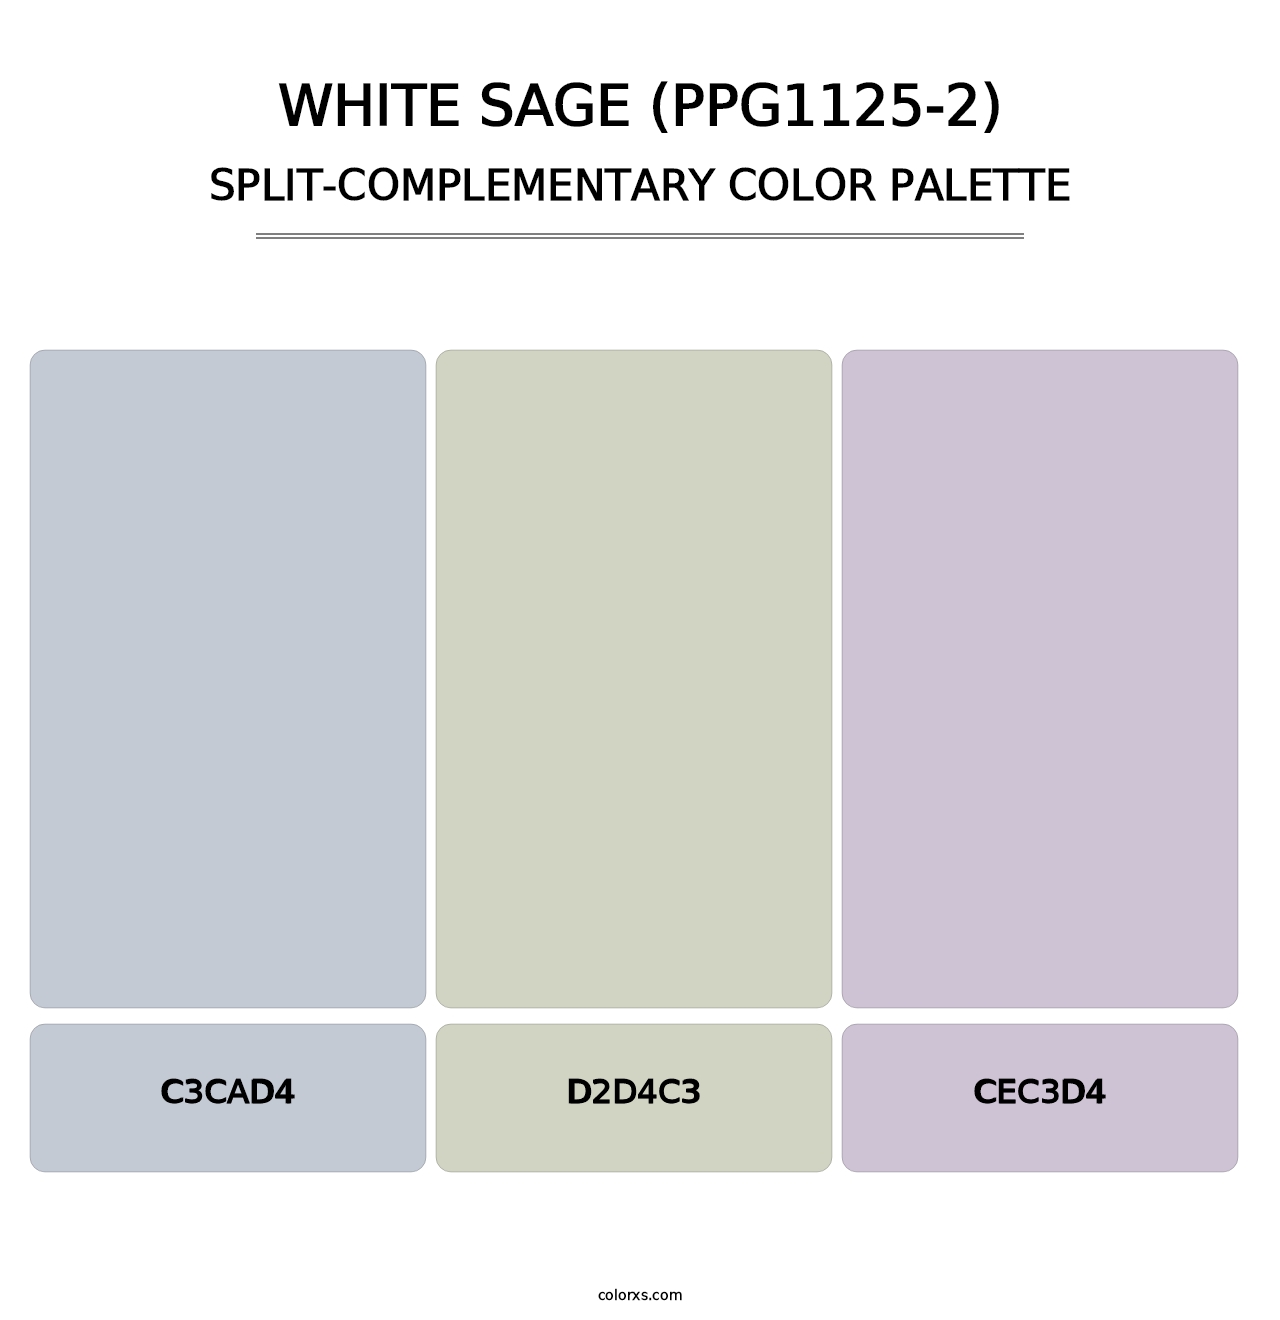 White Sage (PPG1125-2) - Split-Complementary Color Palette